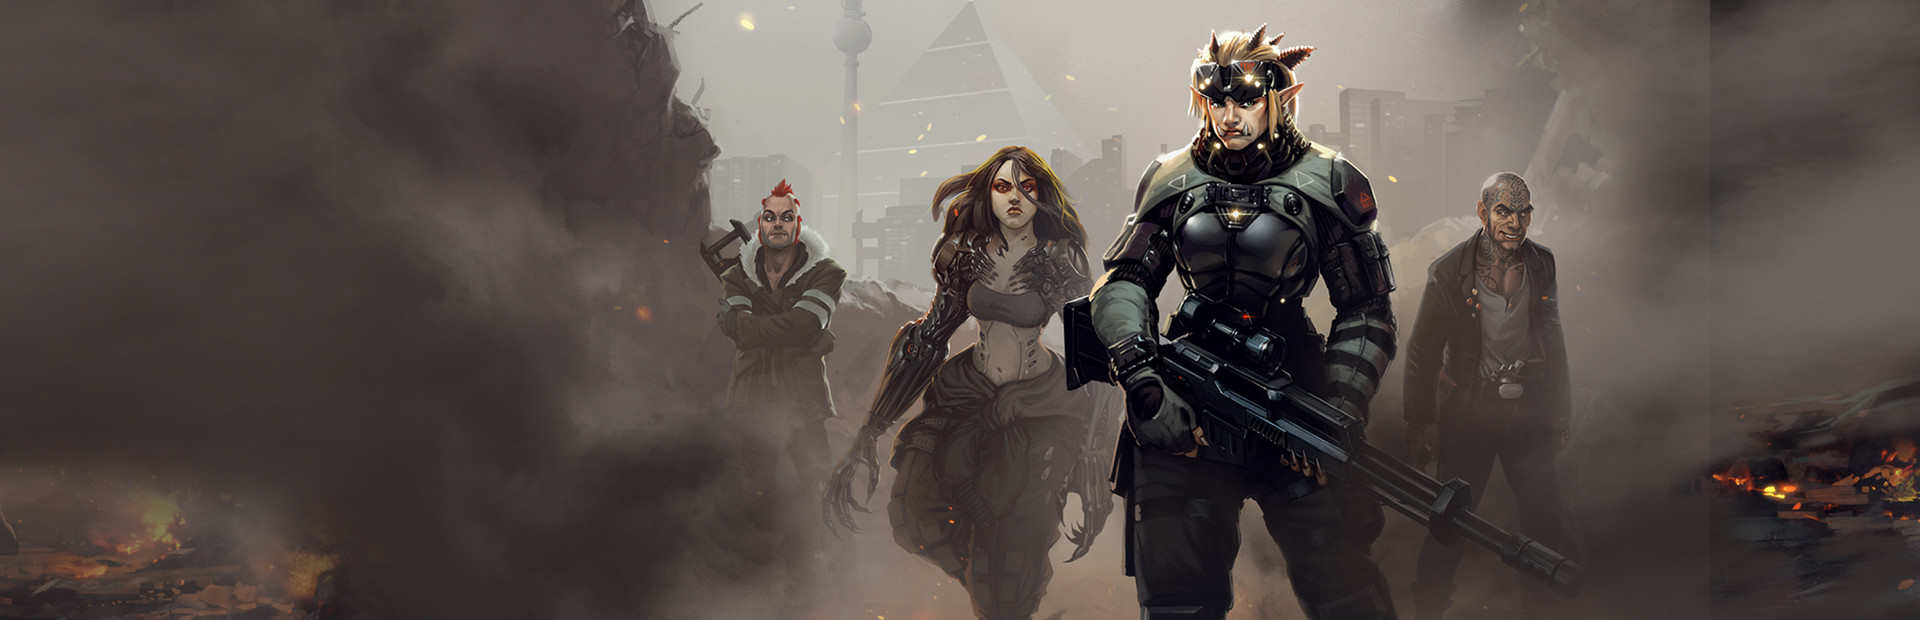 Shadowrun: Dragonfall - Director's Cut cover image